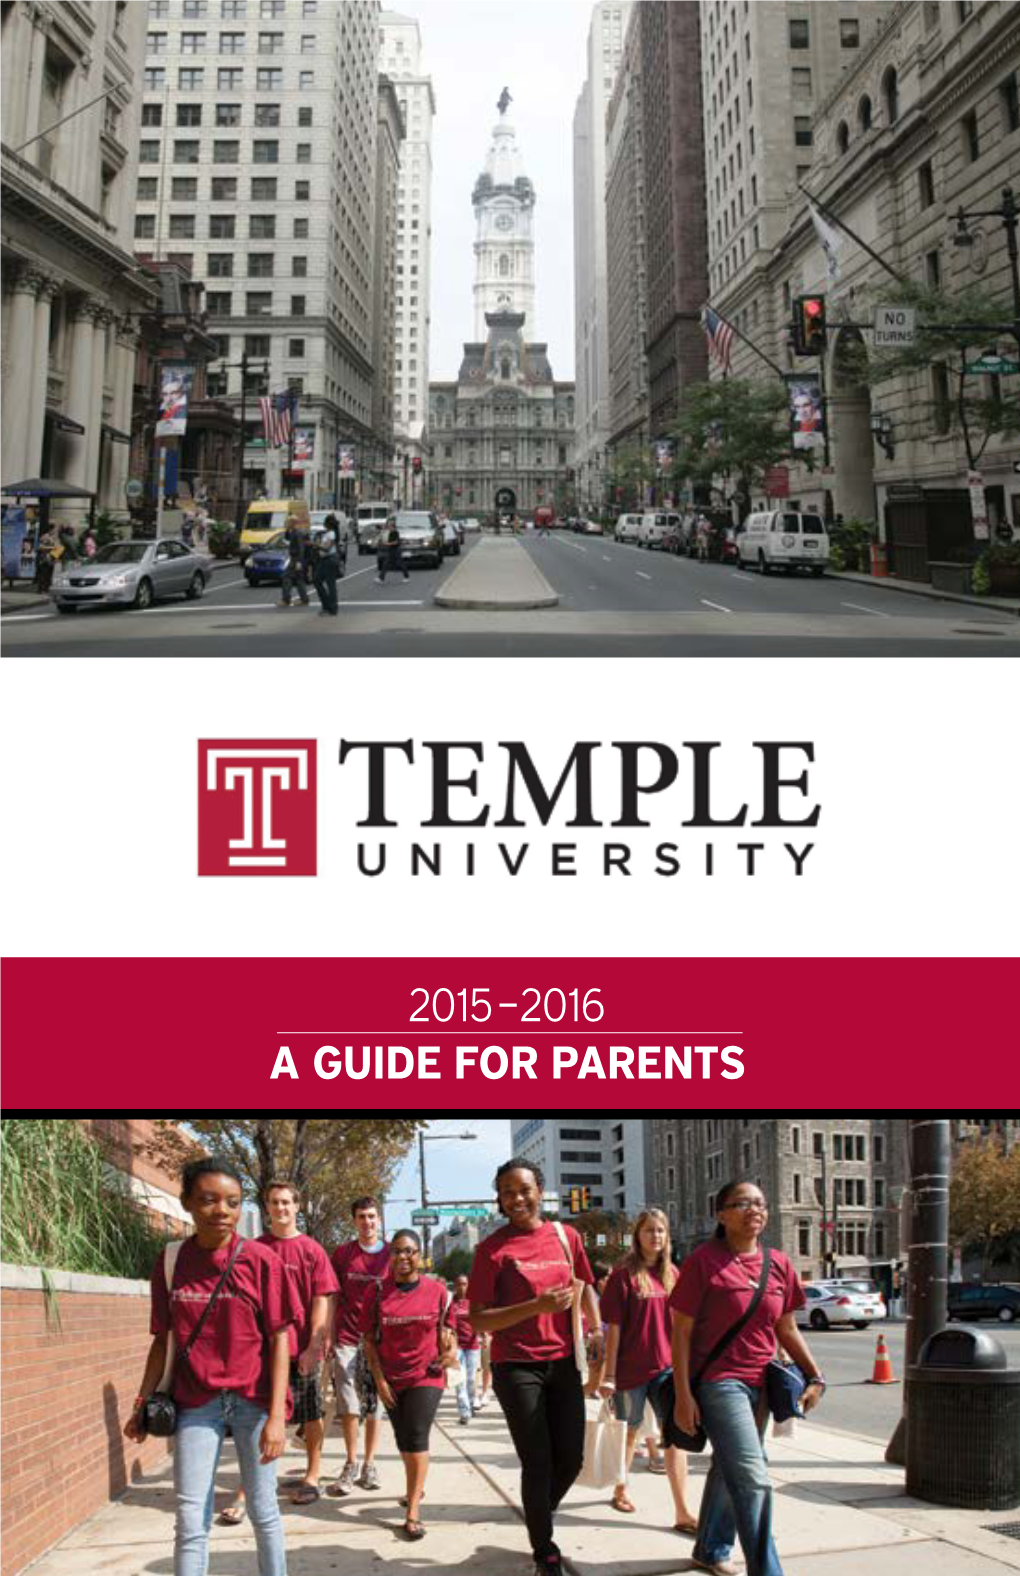 Temple University Howard Gittis Student Center Suite 318 Philadelphia, PA 19122 Phone: (215) 204-8531 Temple.Edu/Orientation